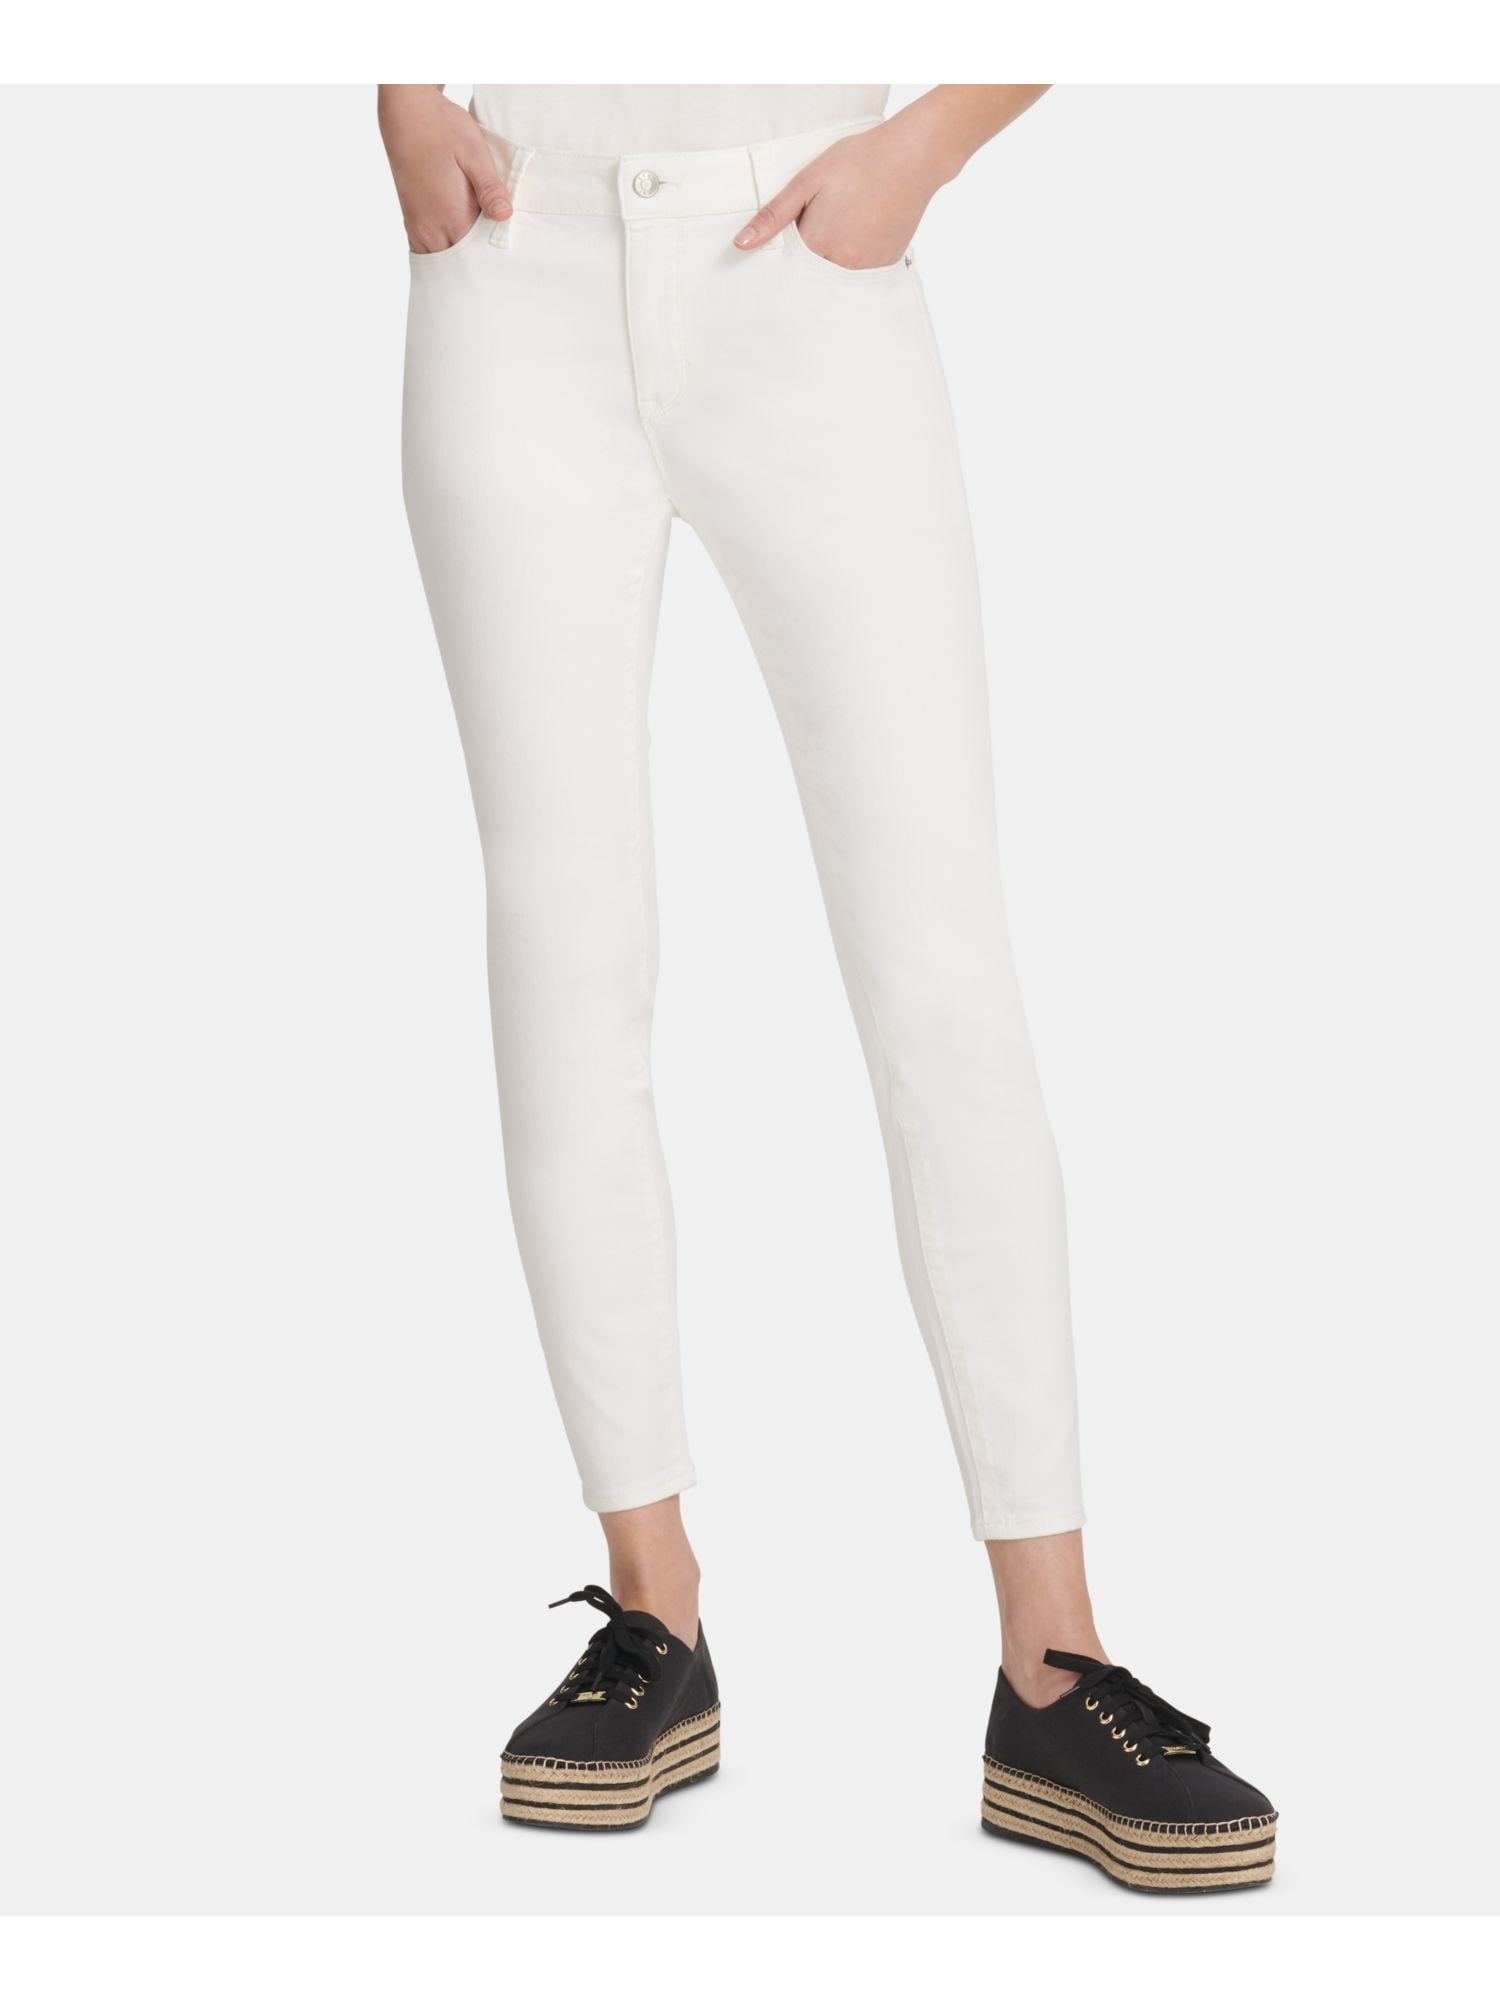 dkny white jeans